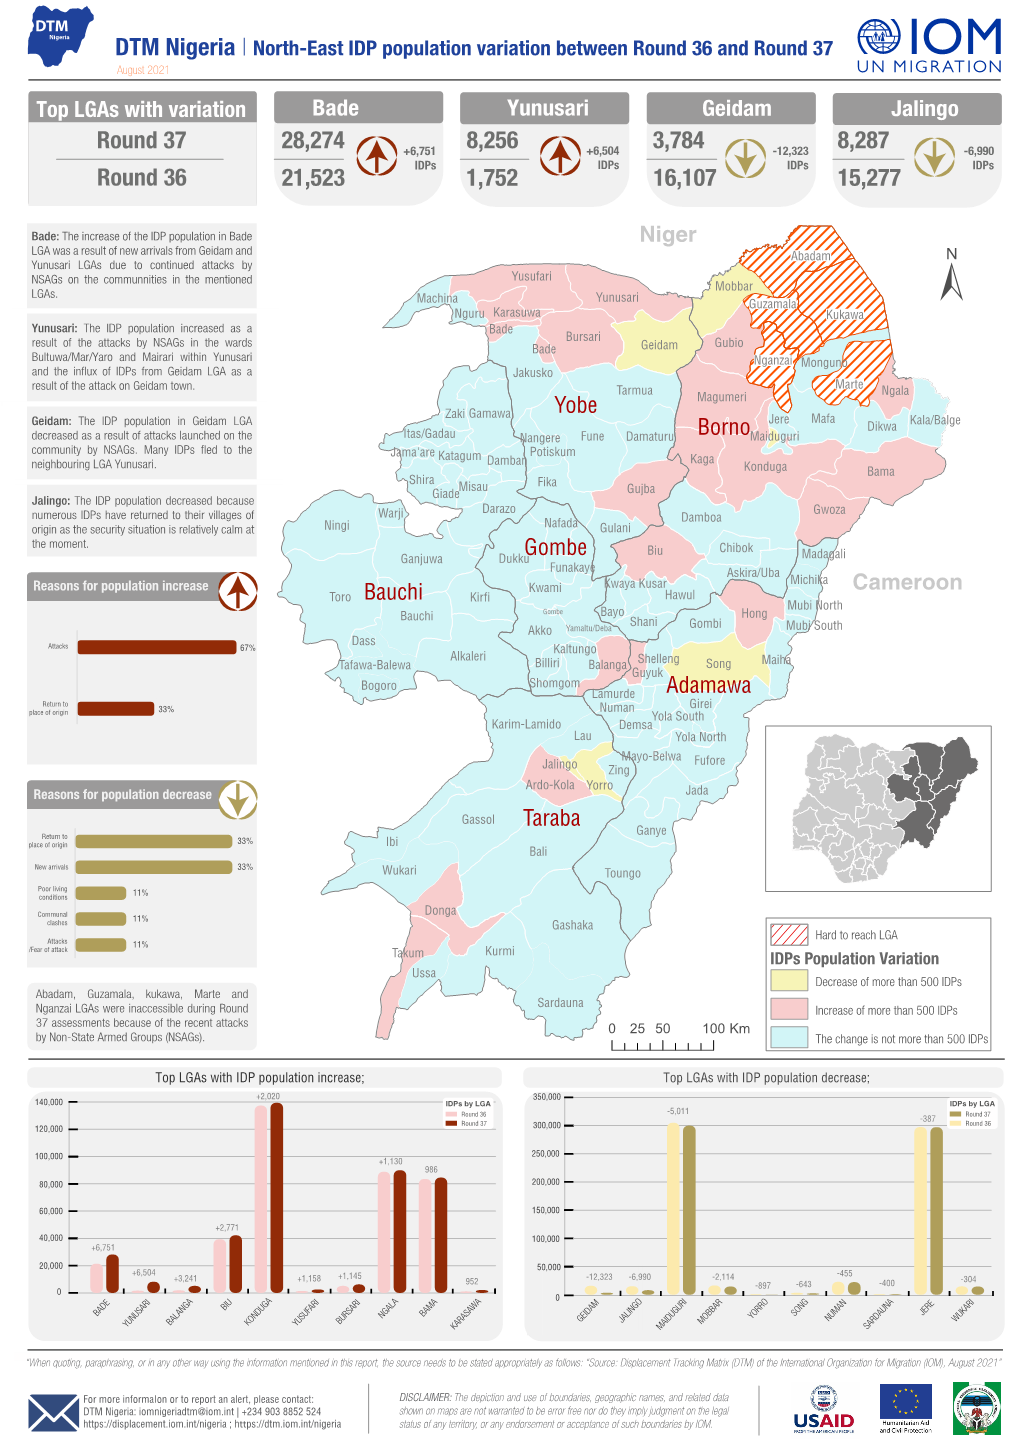 Nigeria DTM Nigeria | North-East IDP Population Variation Between Round 36 and Round 37 August 2021